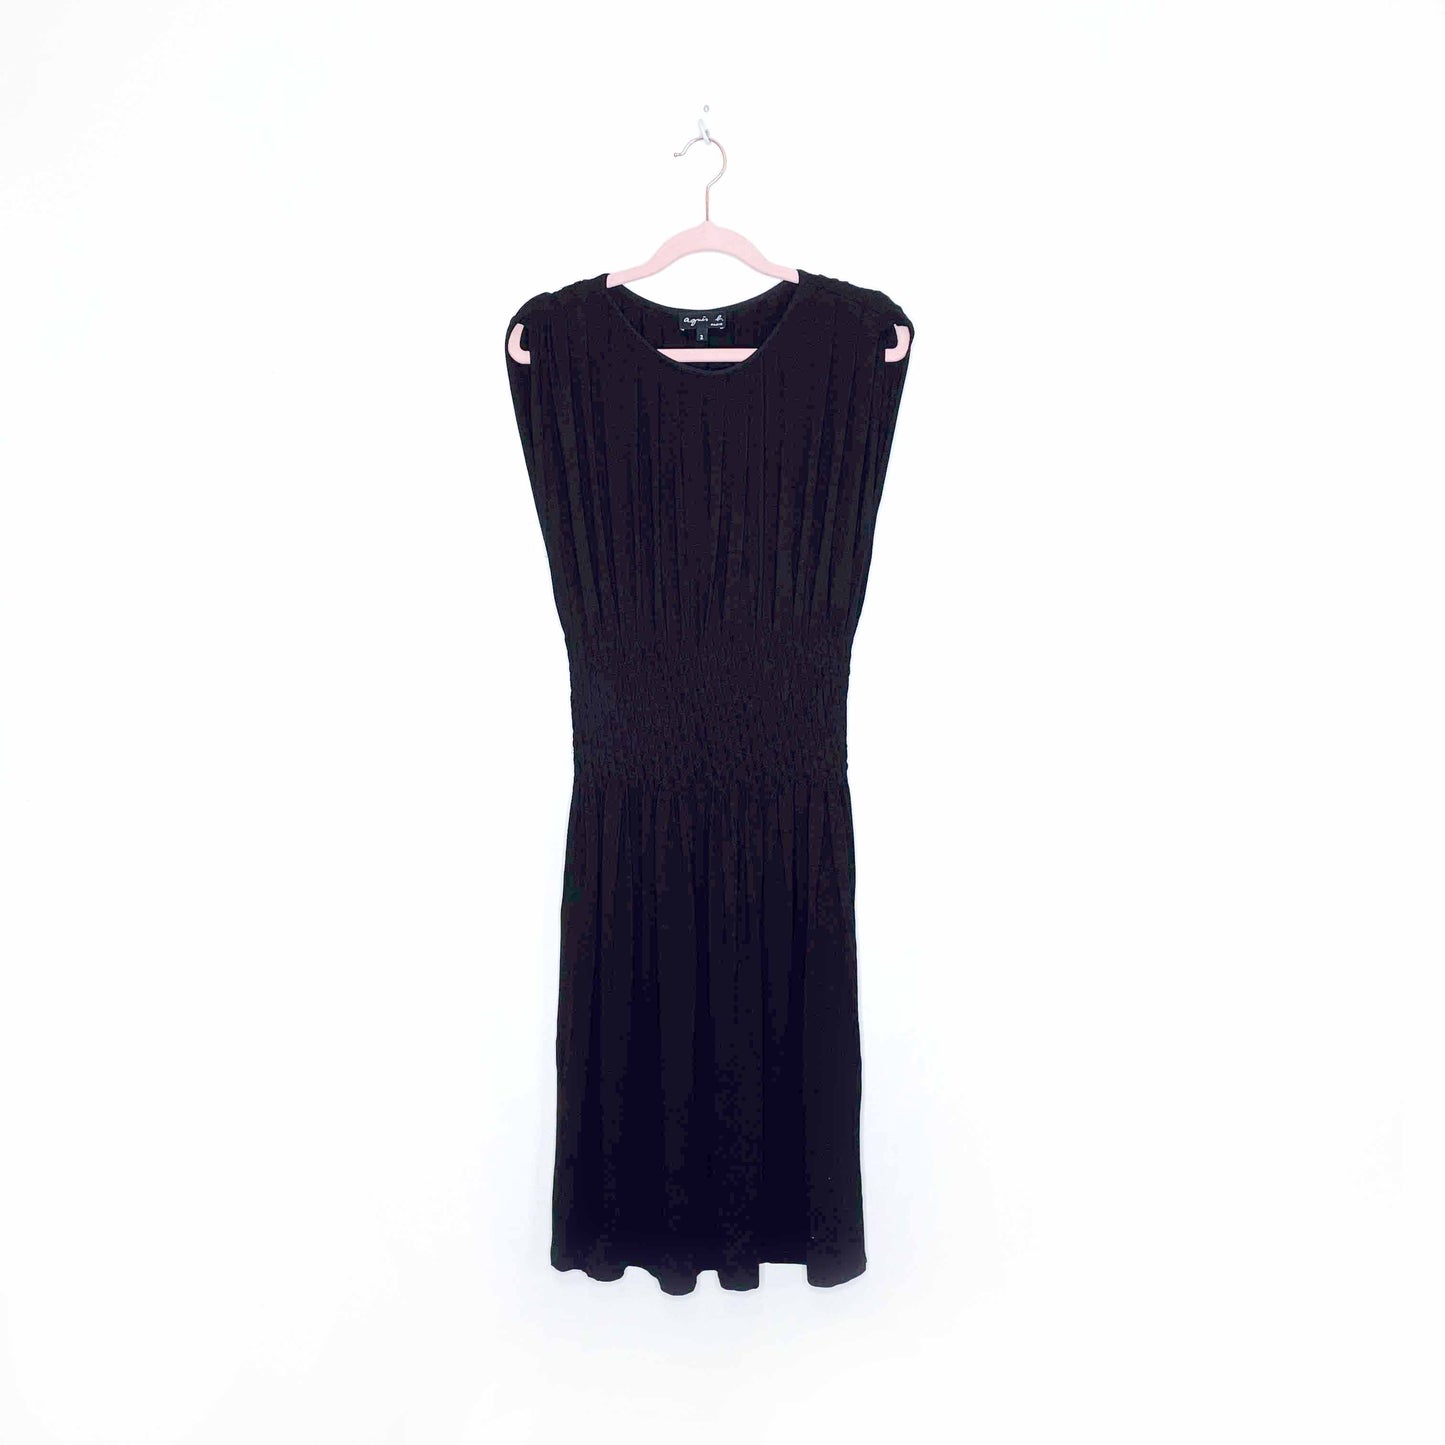 agnes b black smocked waist knit dress - size 2